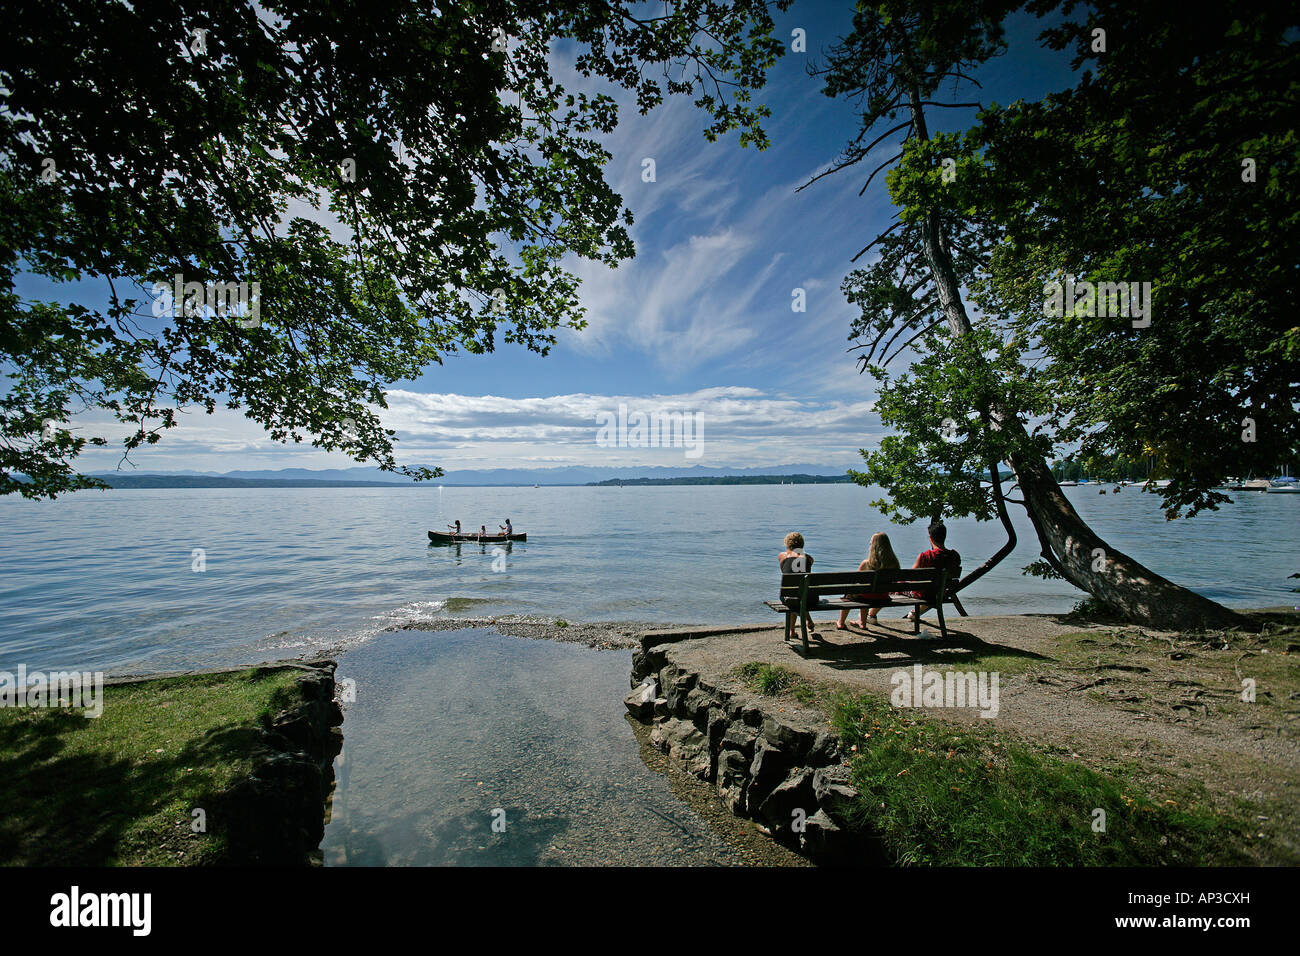 Three people sitting on the lakeshore, kanu in the background, Tutzing, Lake Starnberg, Bavaria, Germany Stock Photo